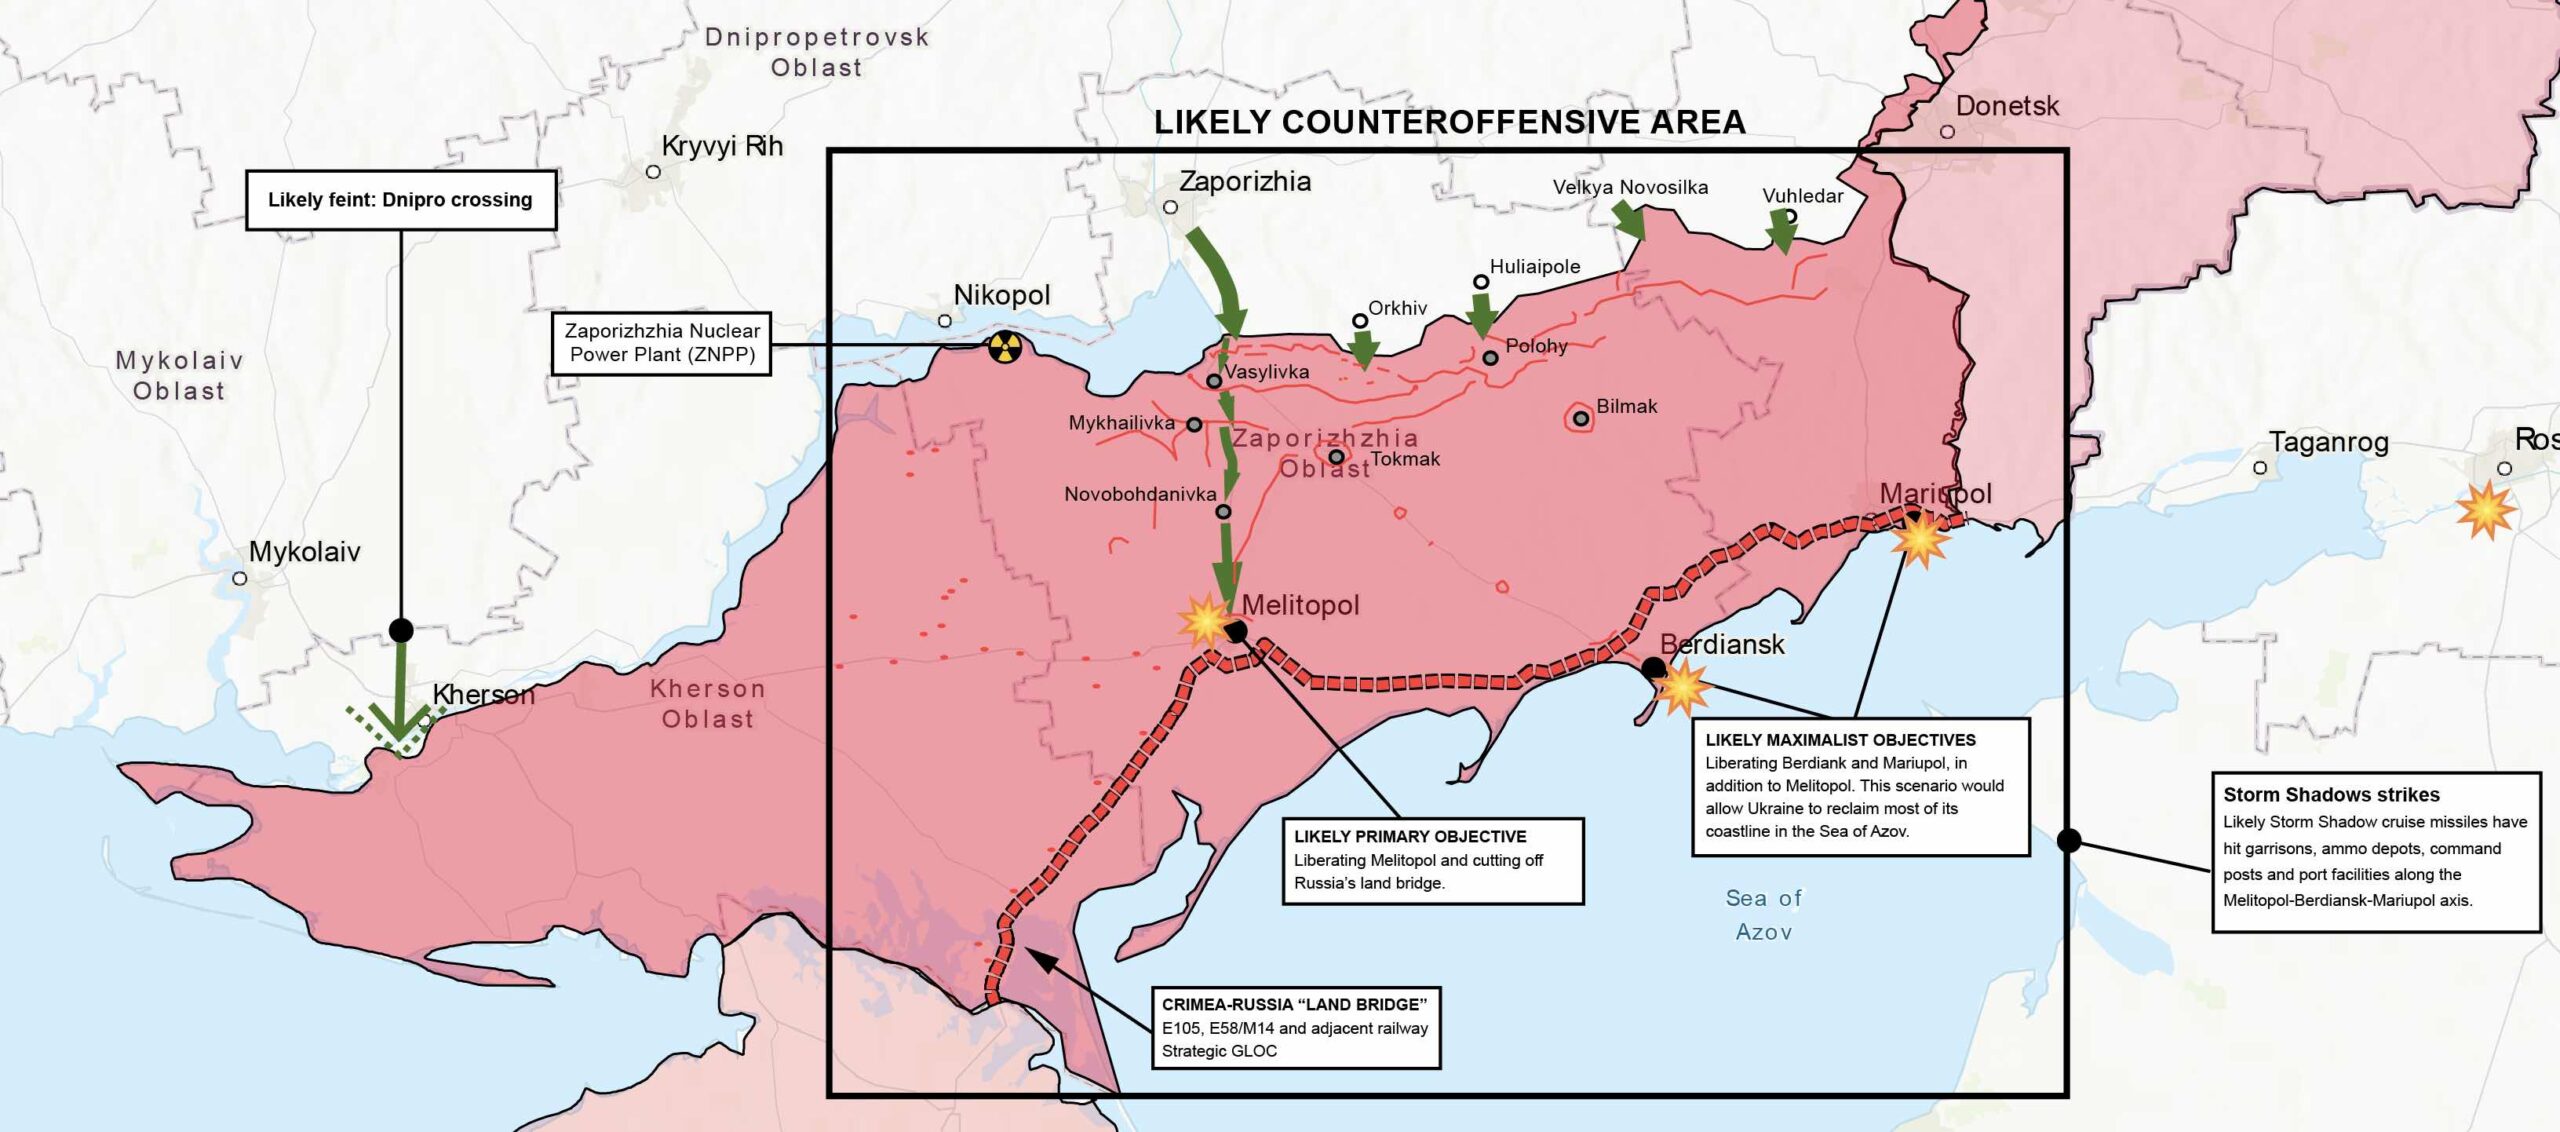 Ukraine’s Counteroffensive is Imminent